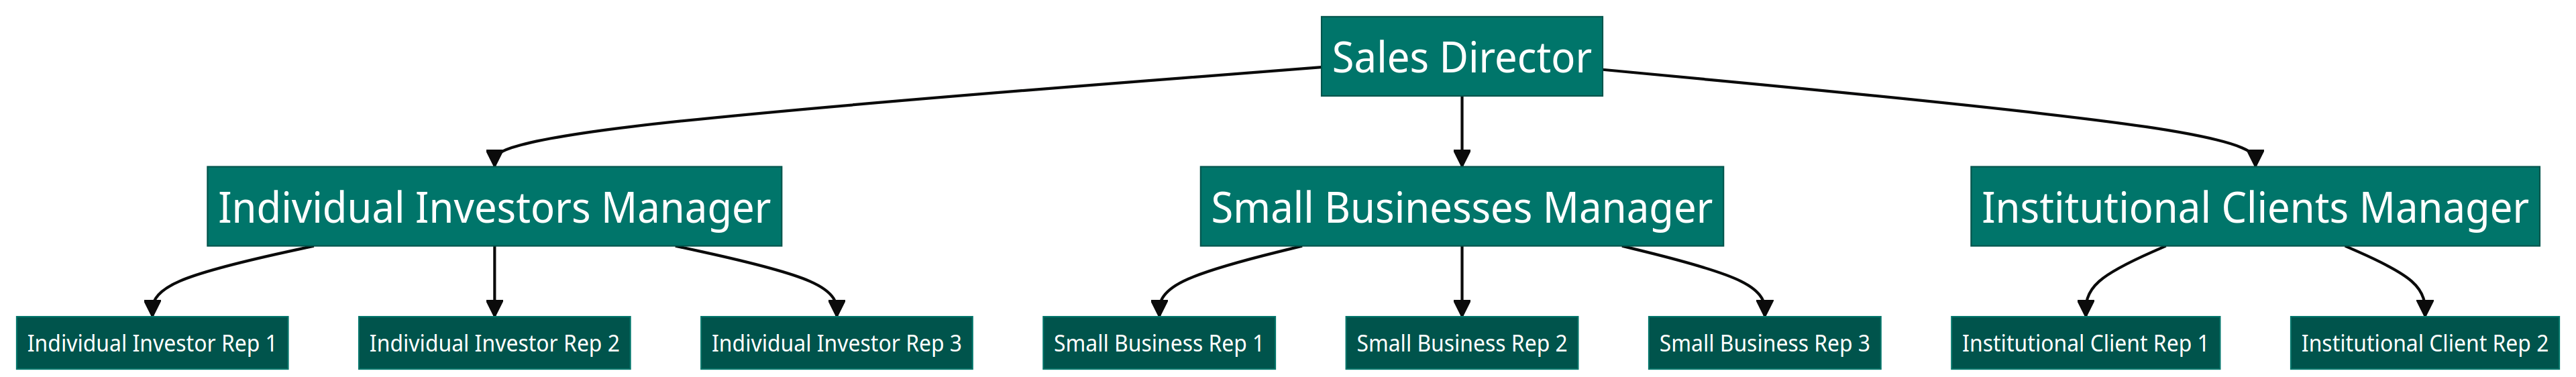 Market-based sales team structure